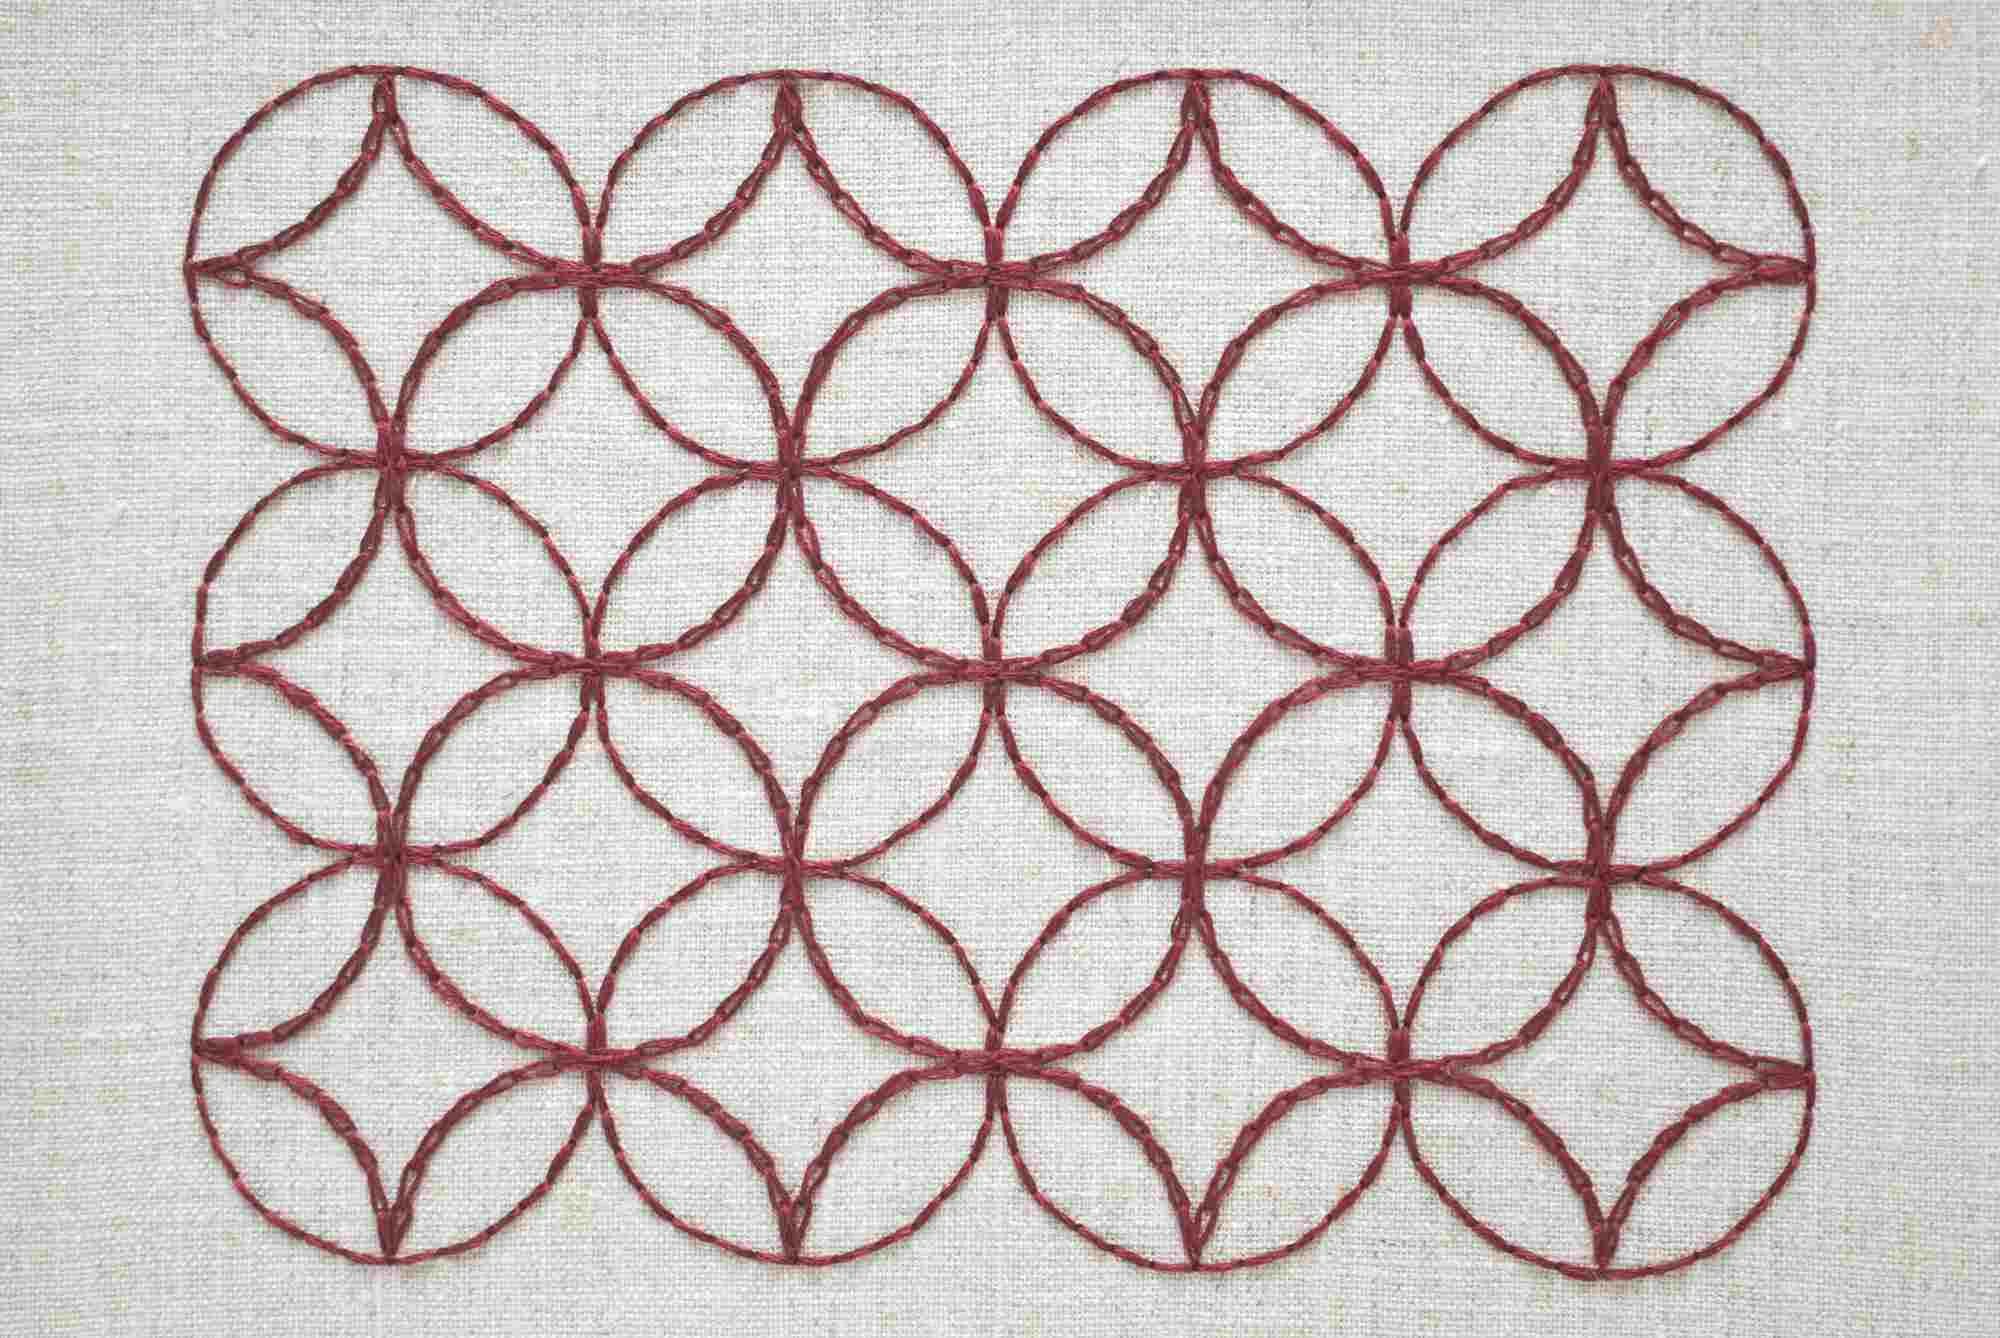 Sashiko Embroidery Patterns Free Sashiko Patterns Projects And Resources